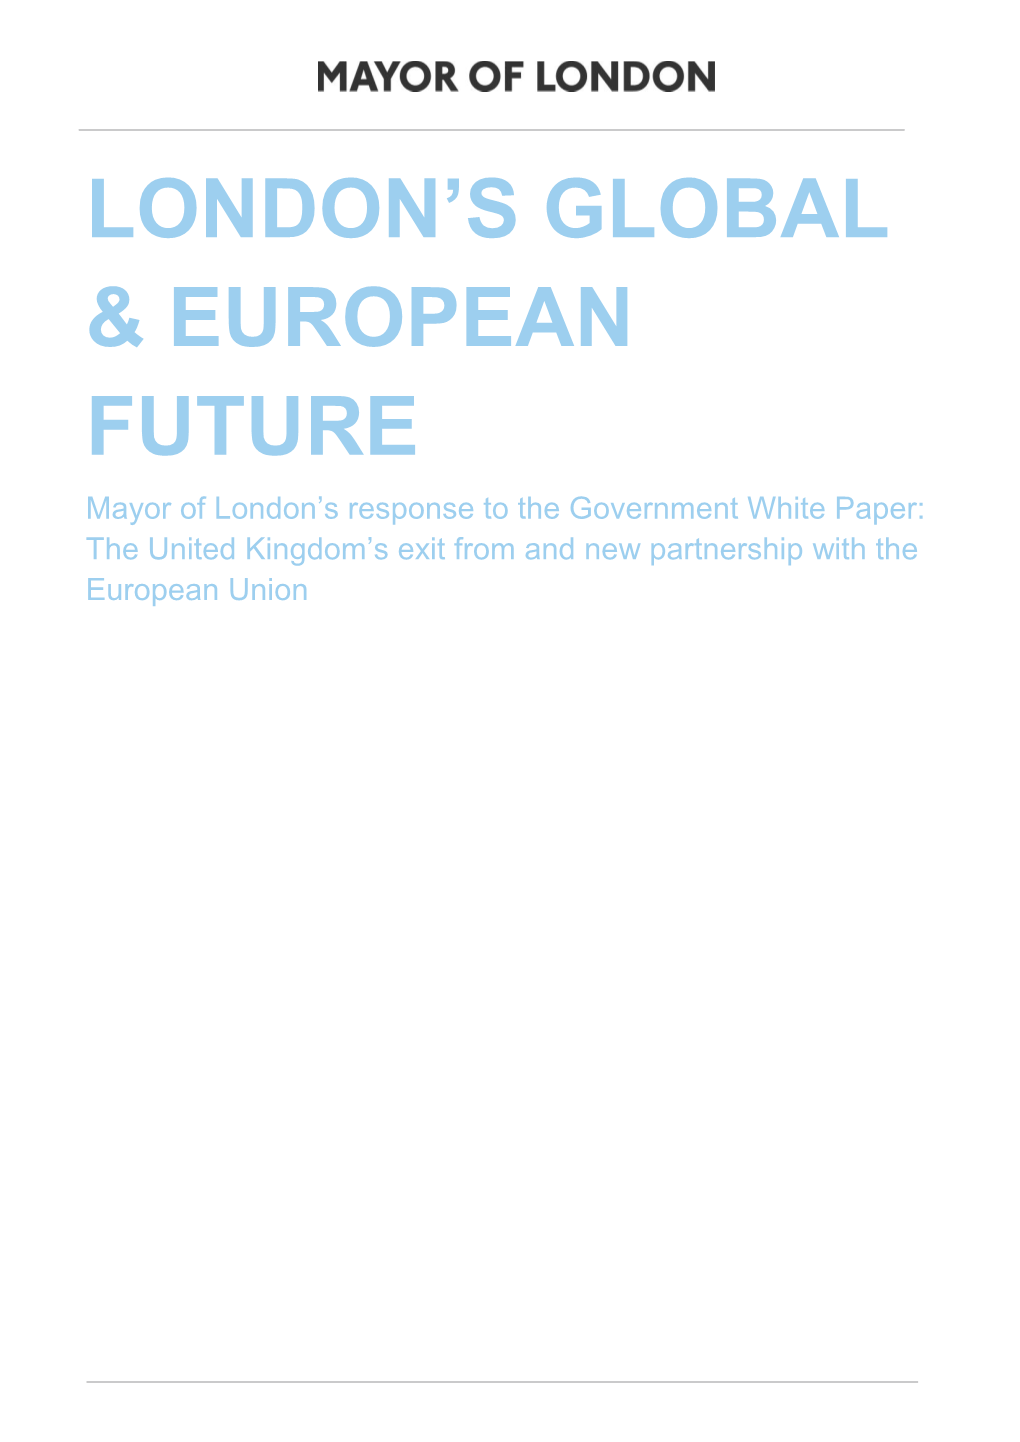 London's Global & European Future